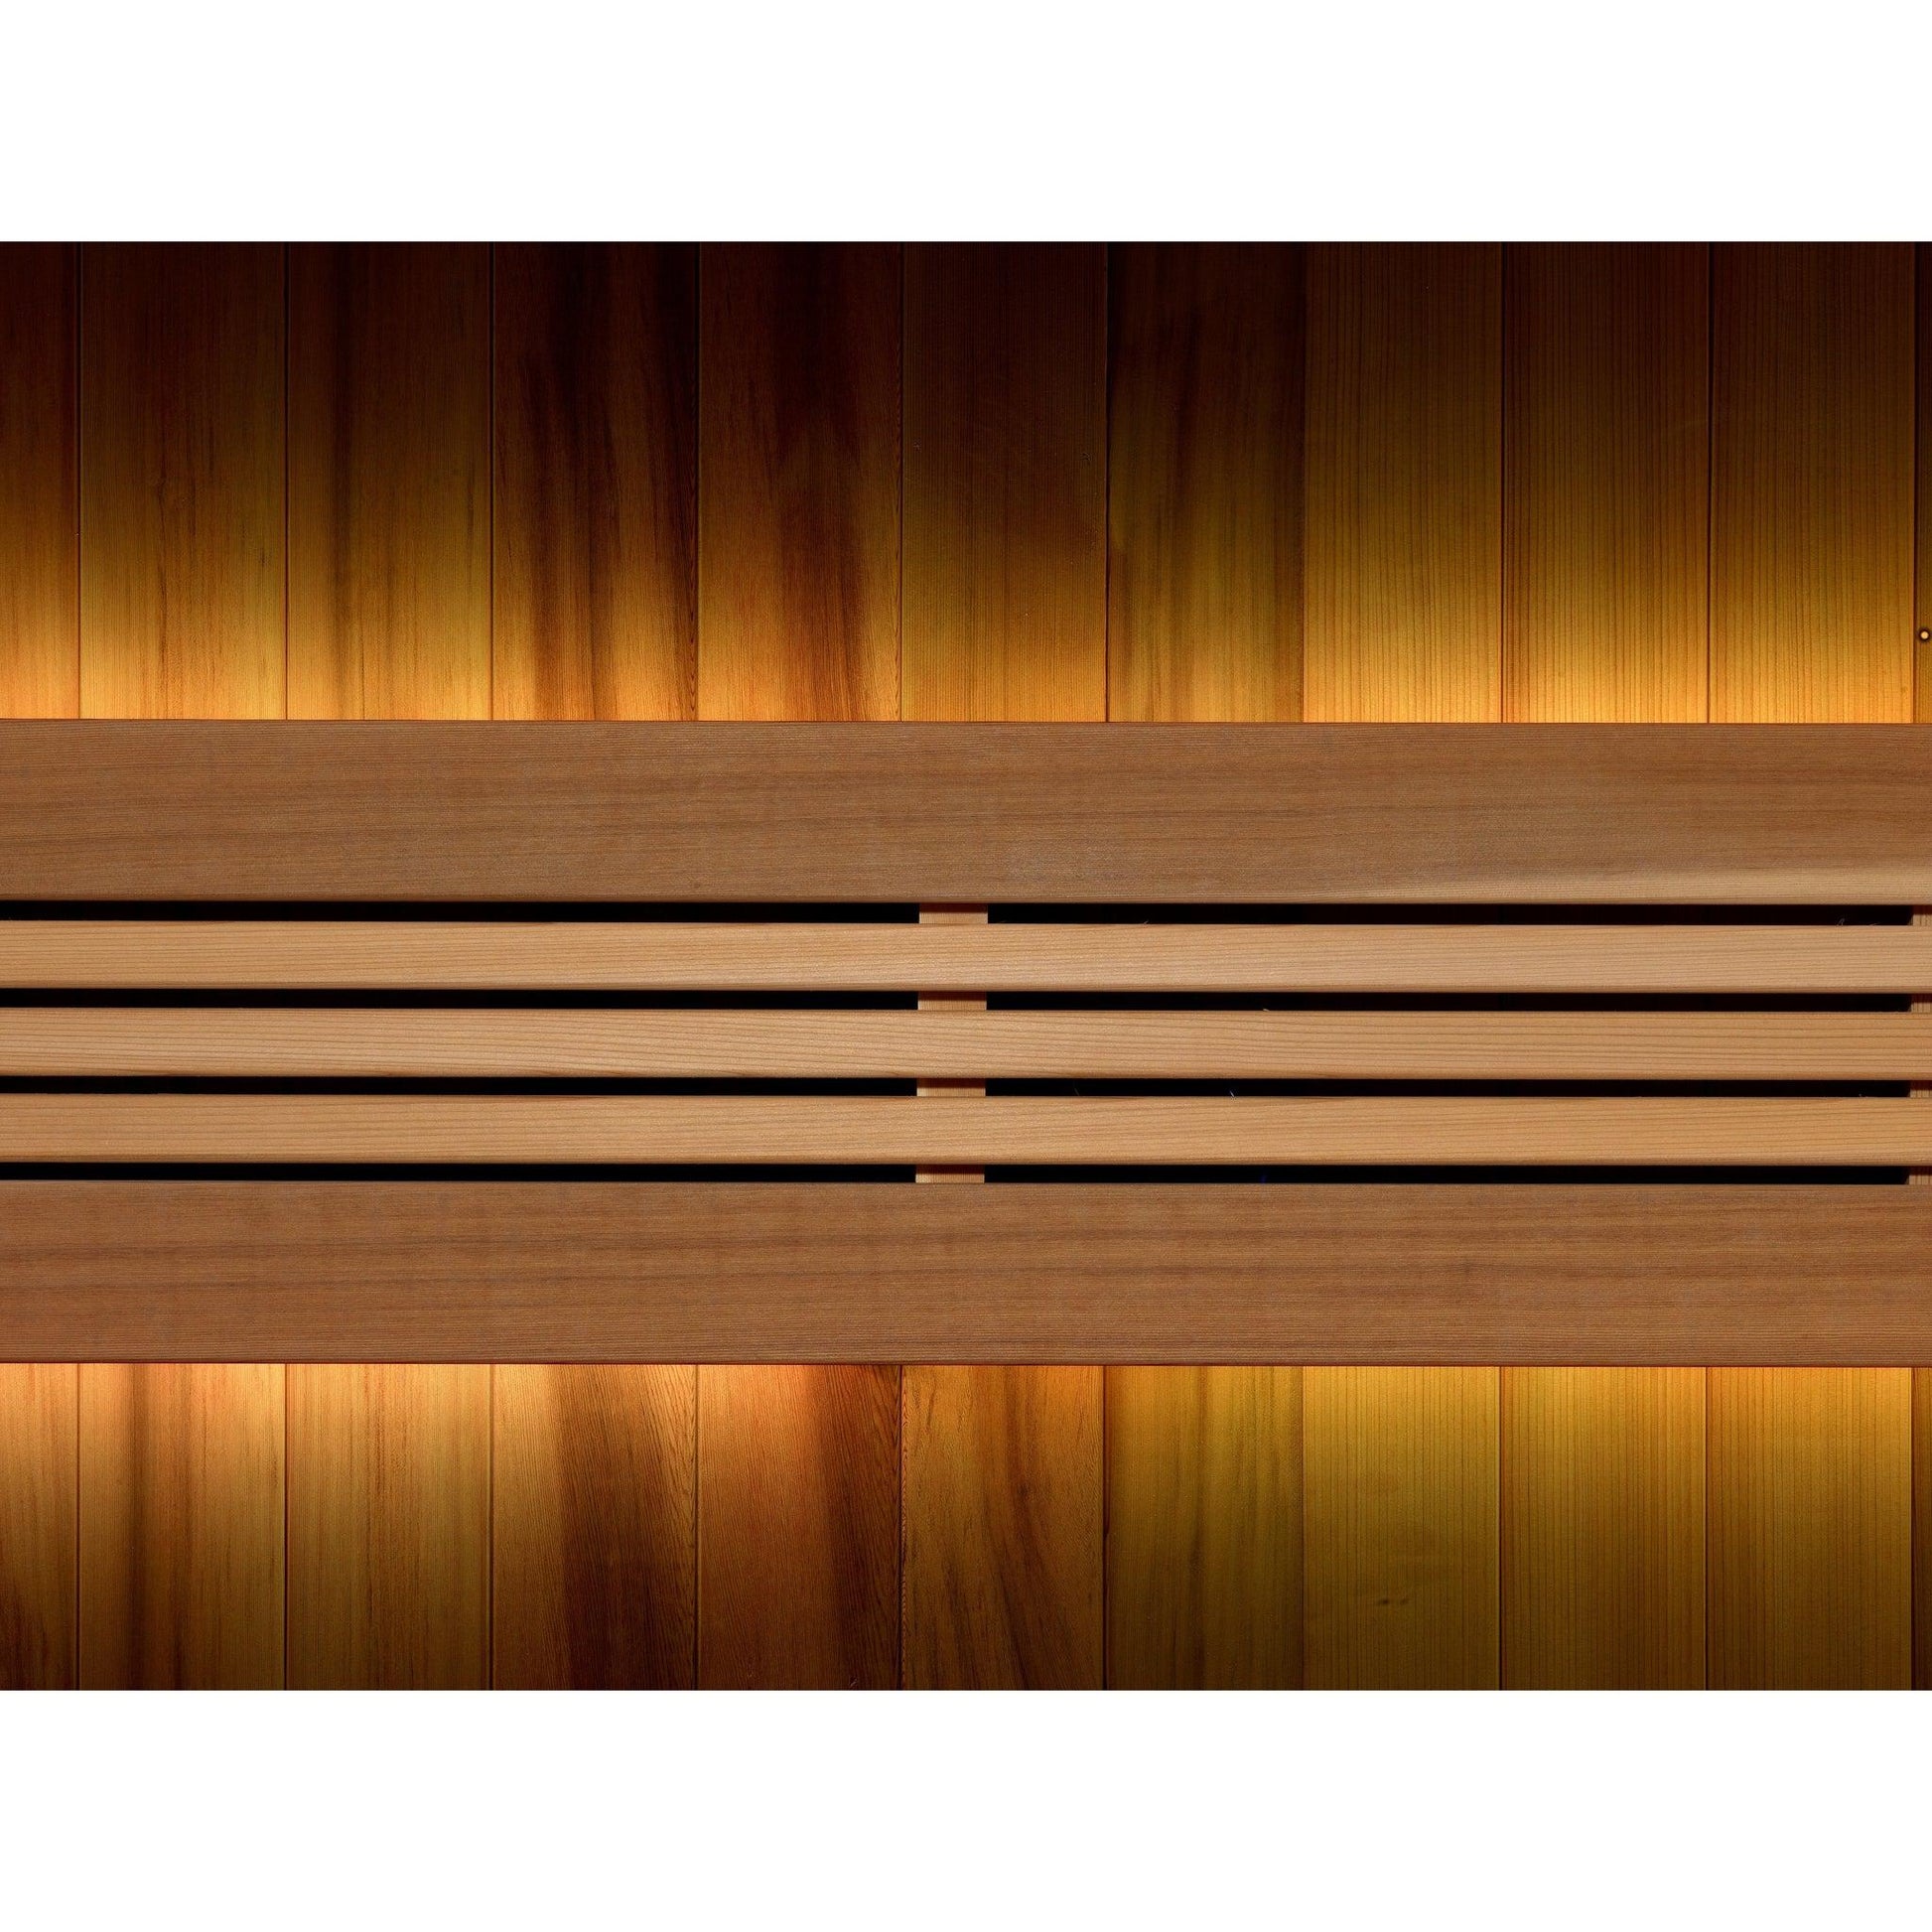 Golden Designs Copenhagen Edition 3-Person Traditional Steam Sauna in Canadian Red Cedar